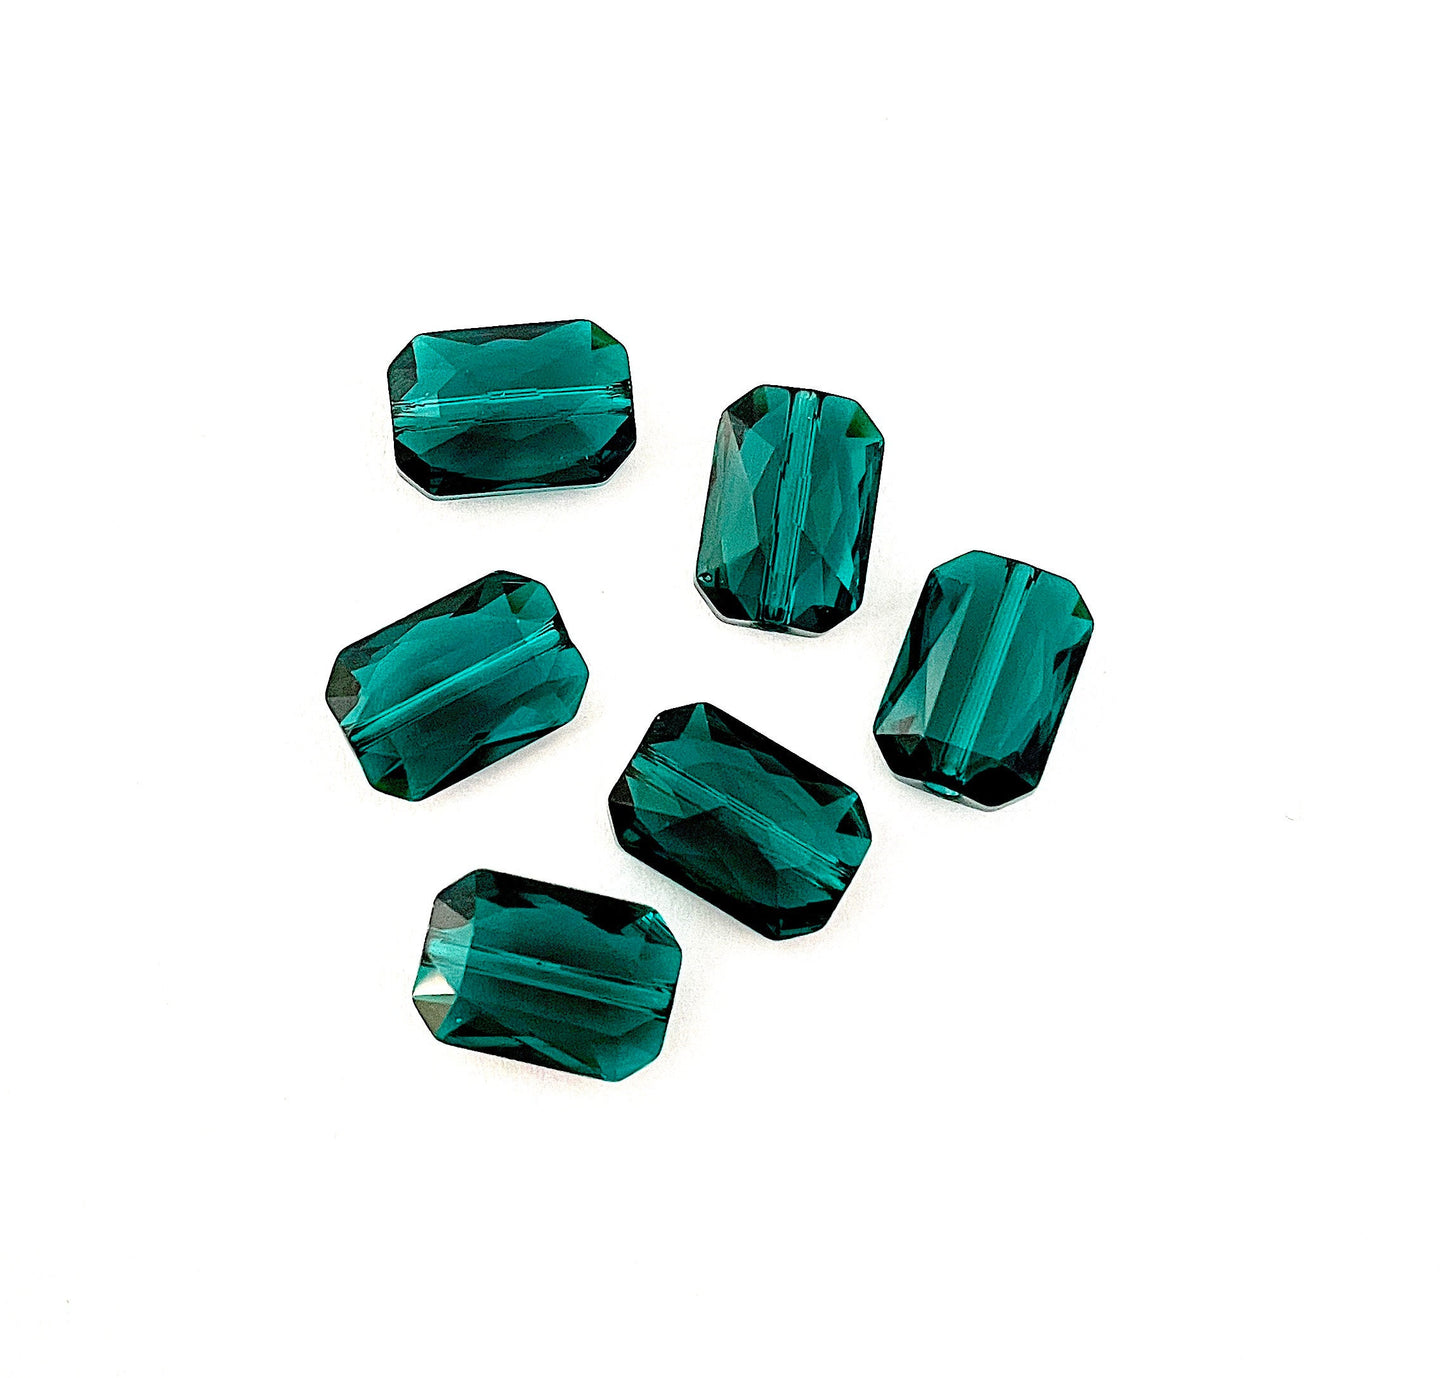 6 pieces of 5515 Emerald Cut Swarovski 14mmx9.5mm in Emerald Color